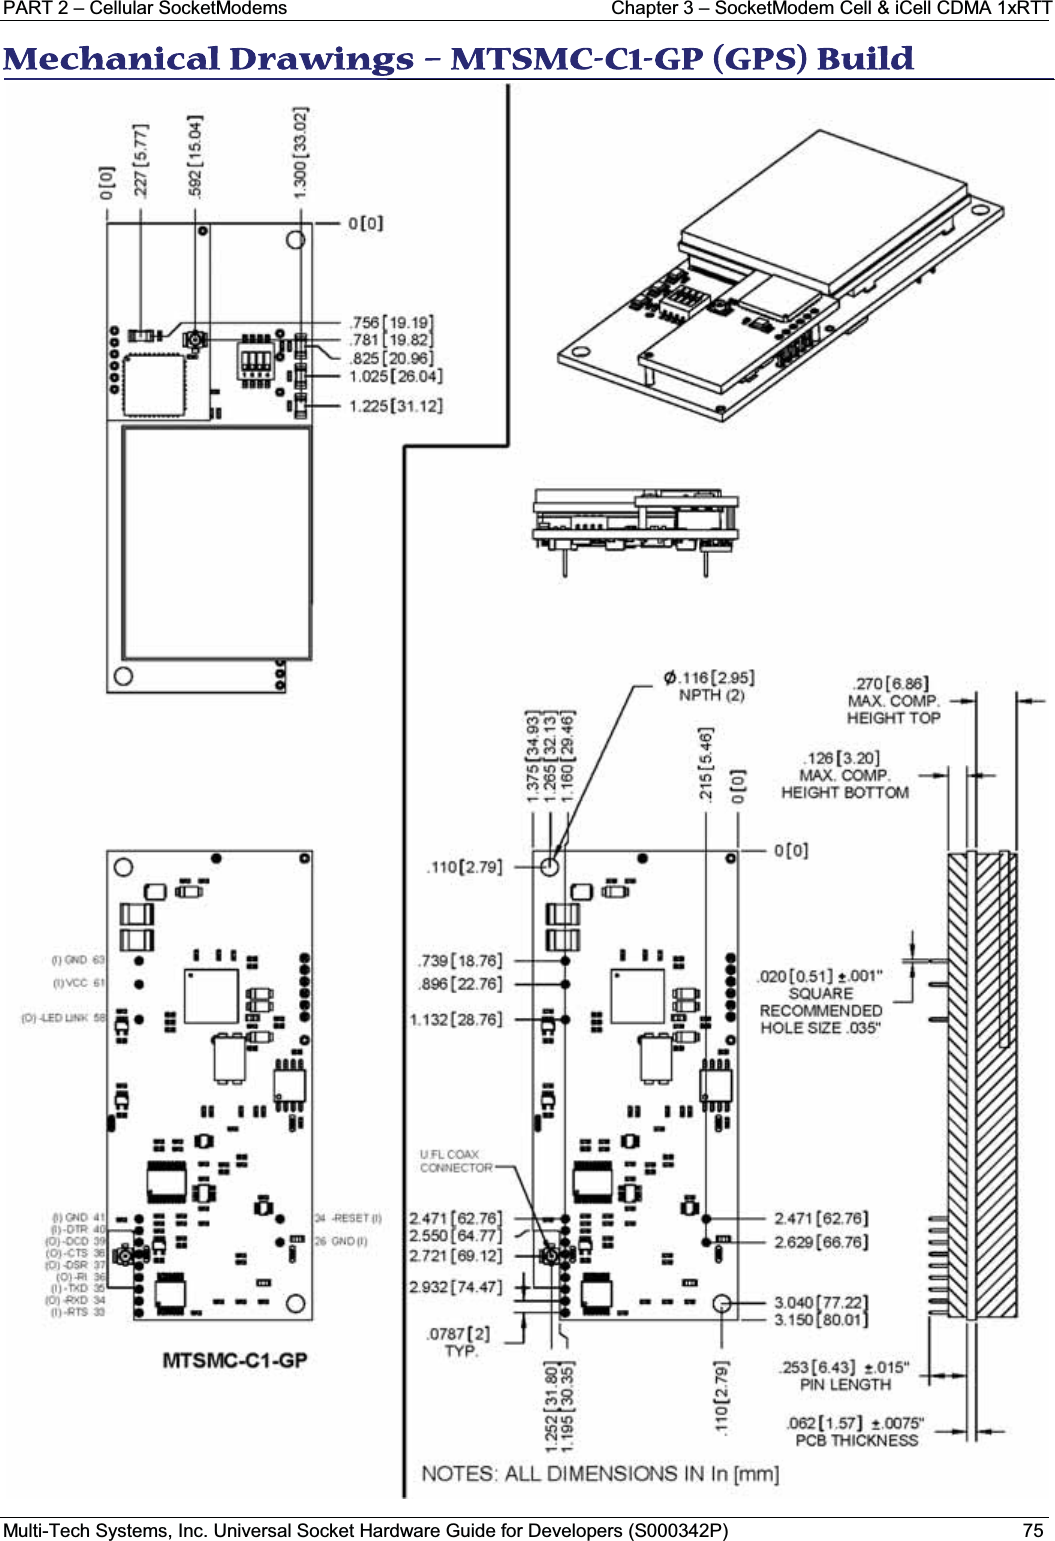 PART 2 – Cellular SocketModems Chapter 3 – SocketModem Cell &amp; iCell CDMA 1xRTT Multi-Tech Systems, Inc. Universal Socket Hardware Guide for Developers (S000342P) 75MMechanical Drawings – MTSMC-C1-GP (GPS) Build 